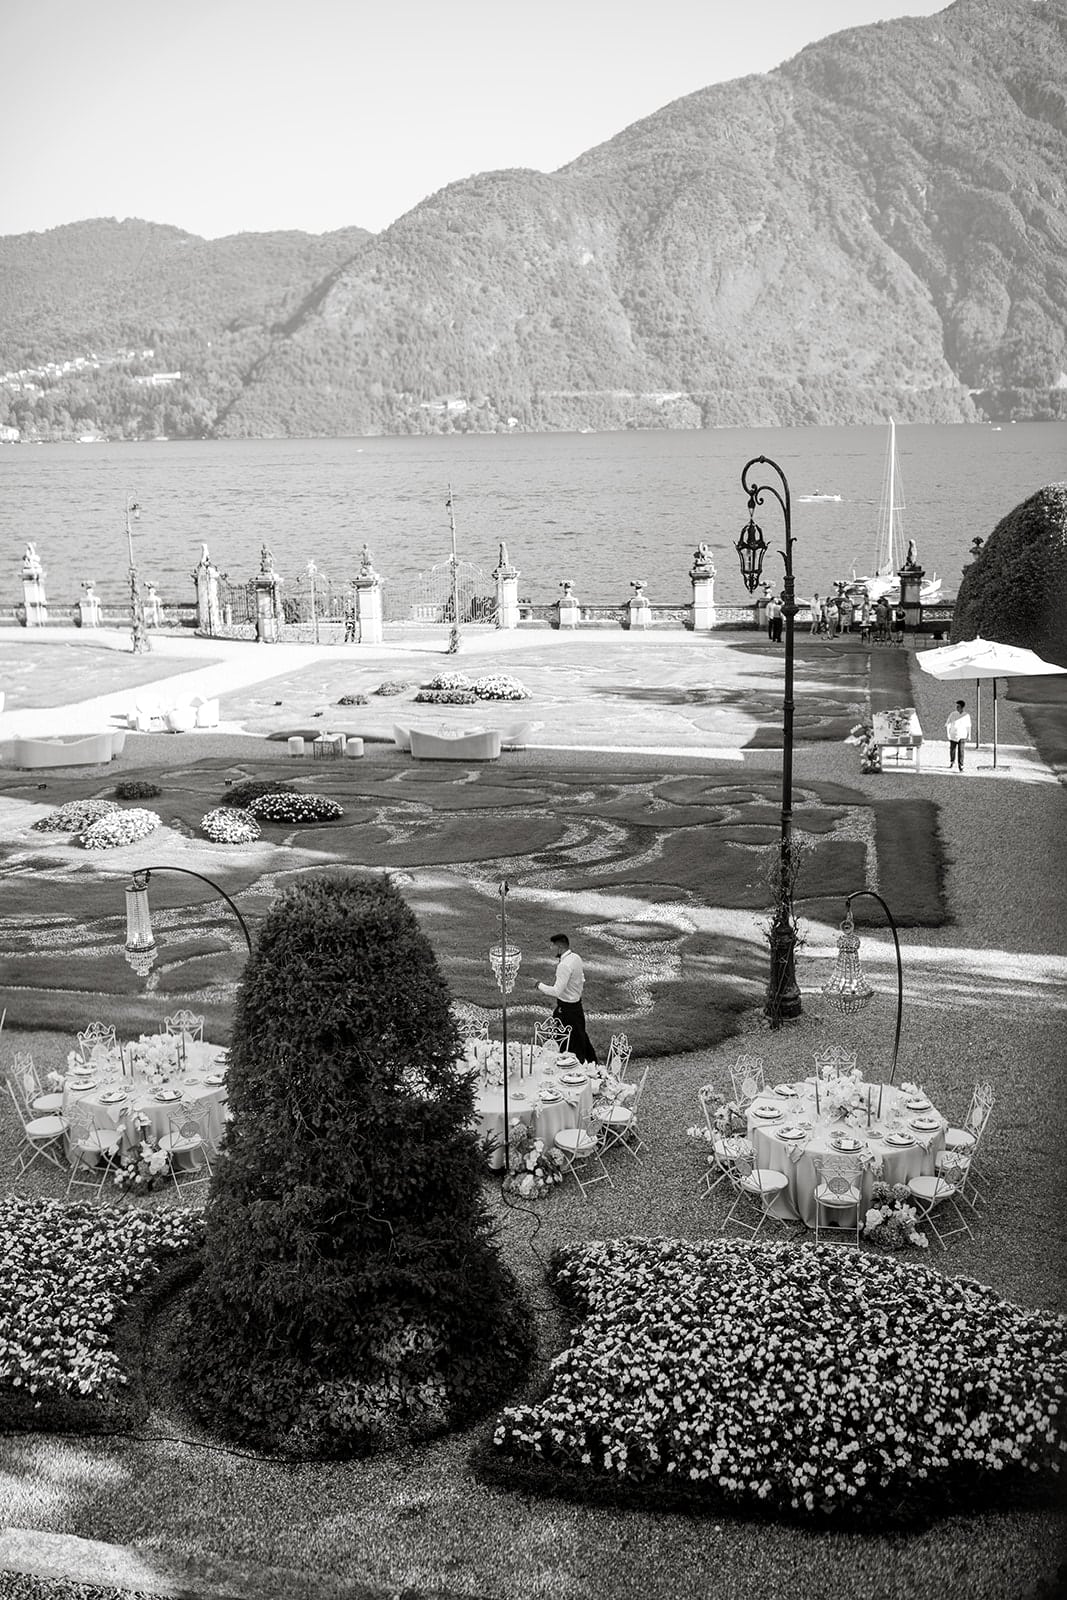 Villa sola Cabiati overlooks Lake Como